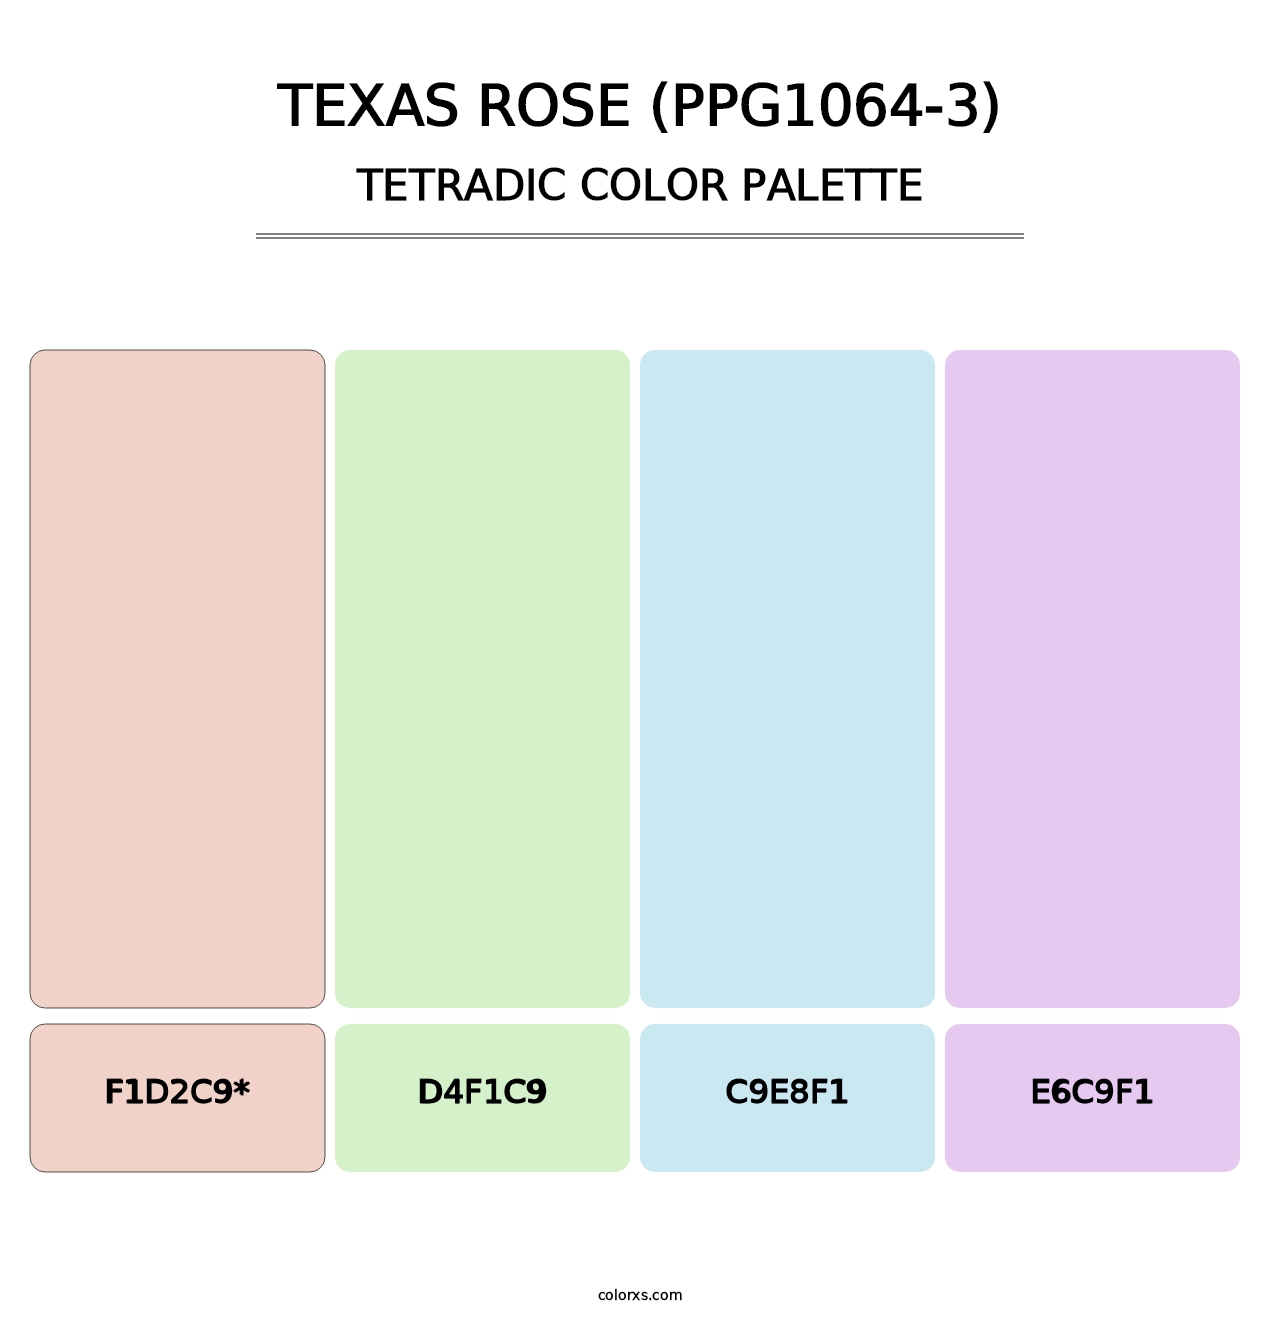 Texas Rose (PPG1064-3) - Tetradic Color Palette